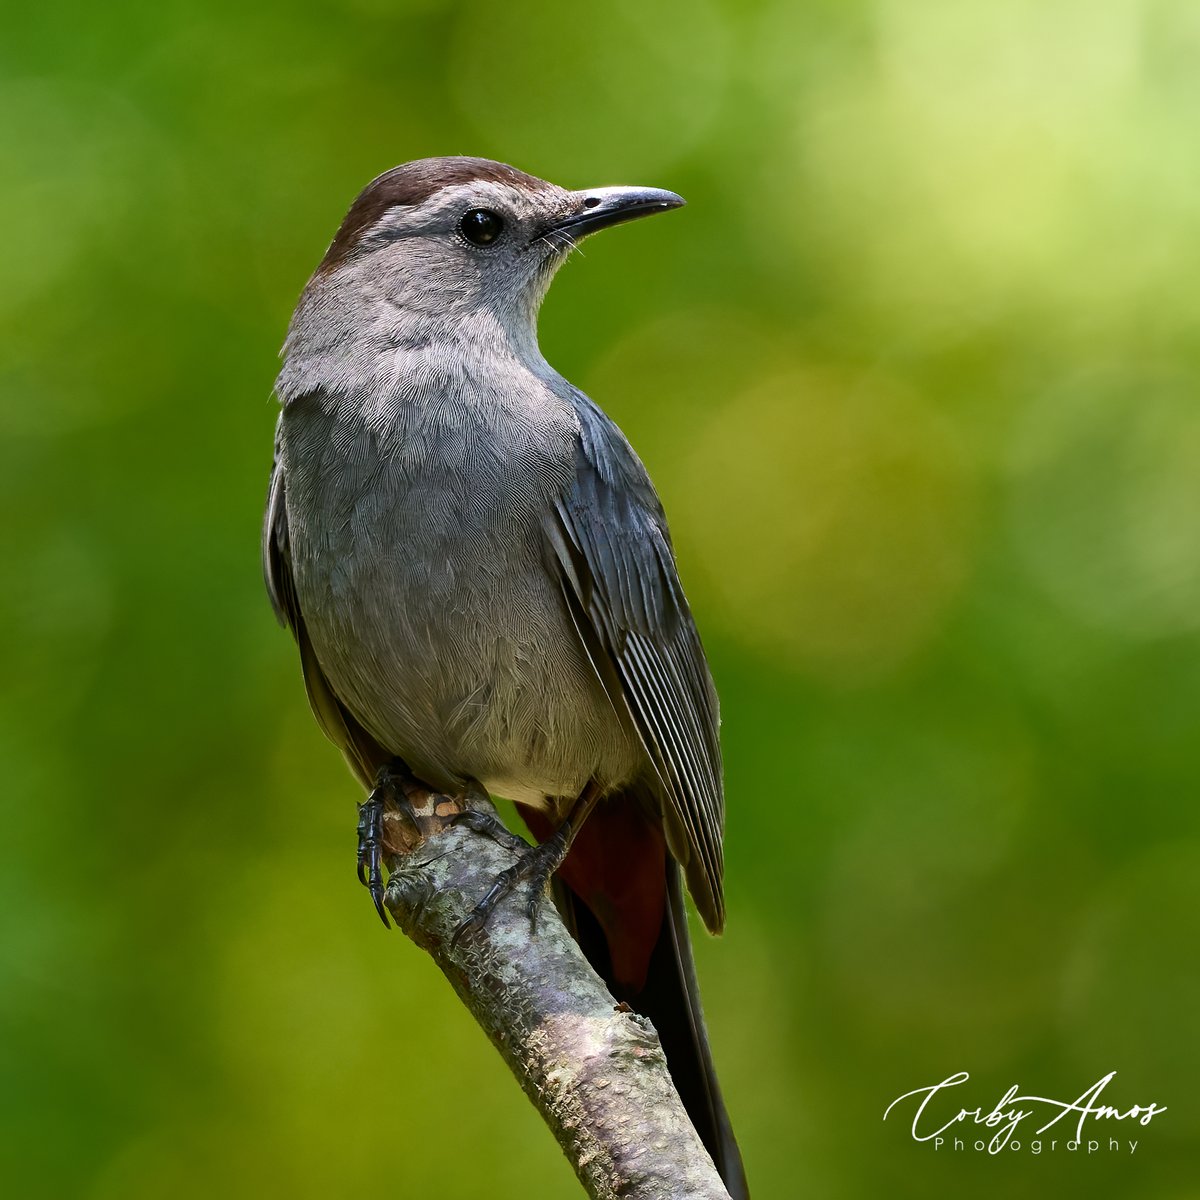 Gray Catbird
.
linktr.ee/corbyamos
.
#birdphotography #birdwatching #birding #BirdTwitter #twitterbirds #birdpics